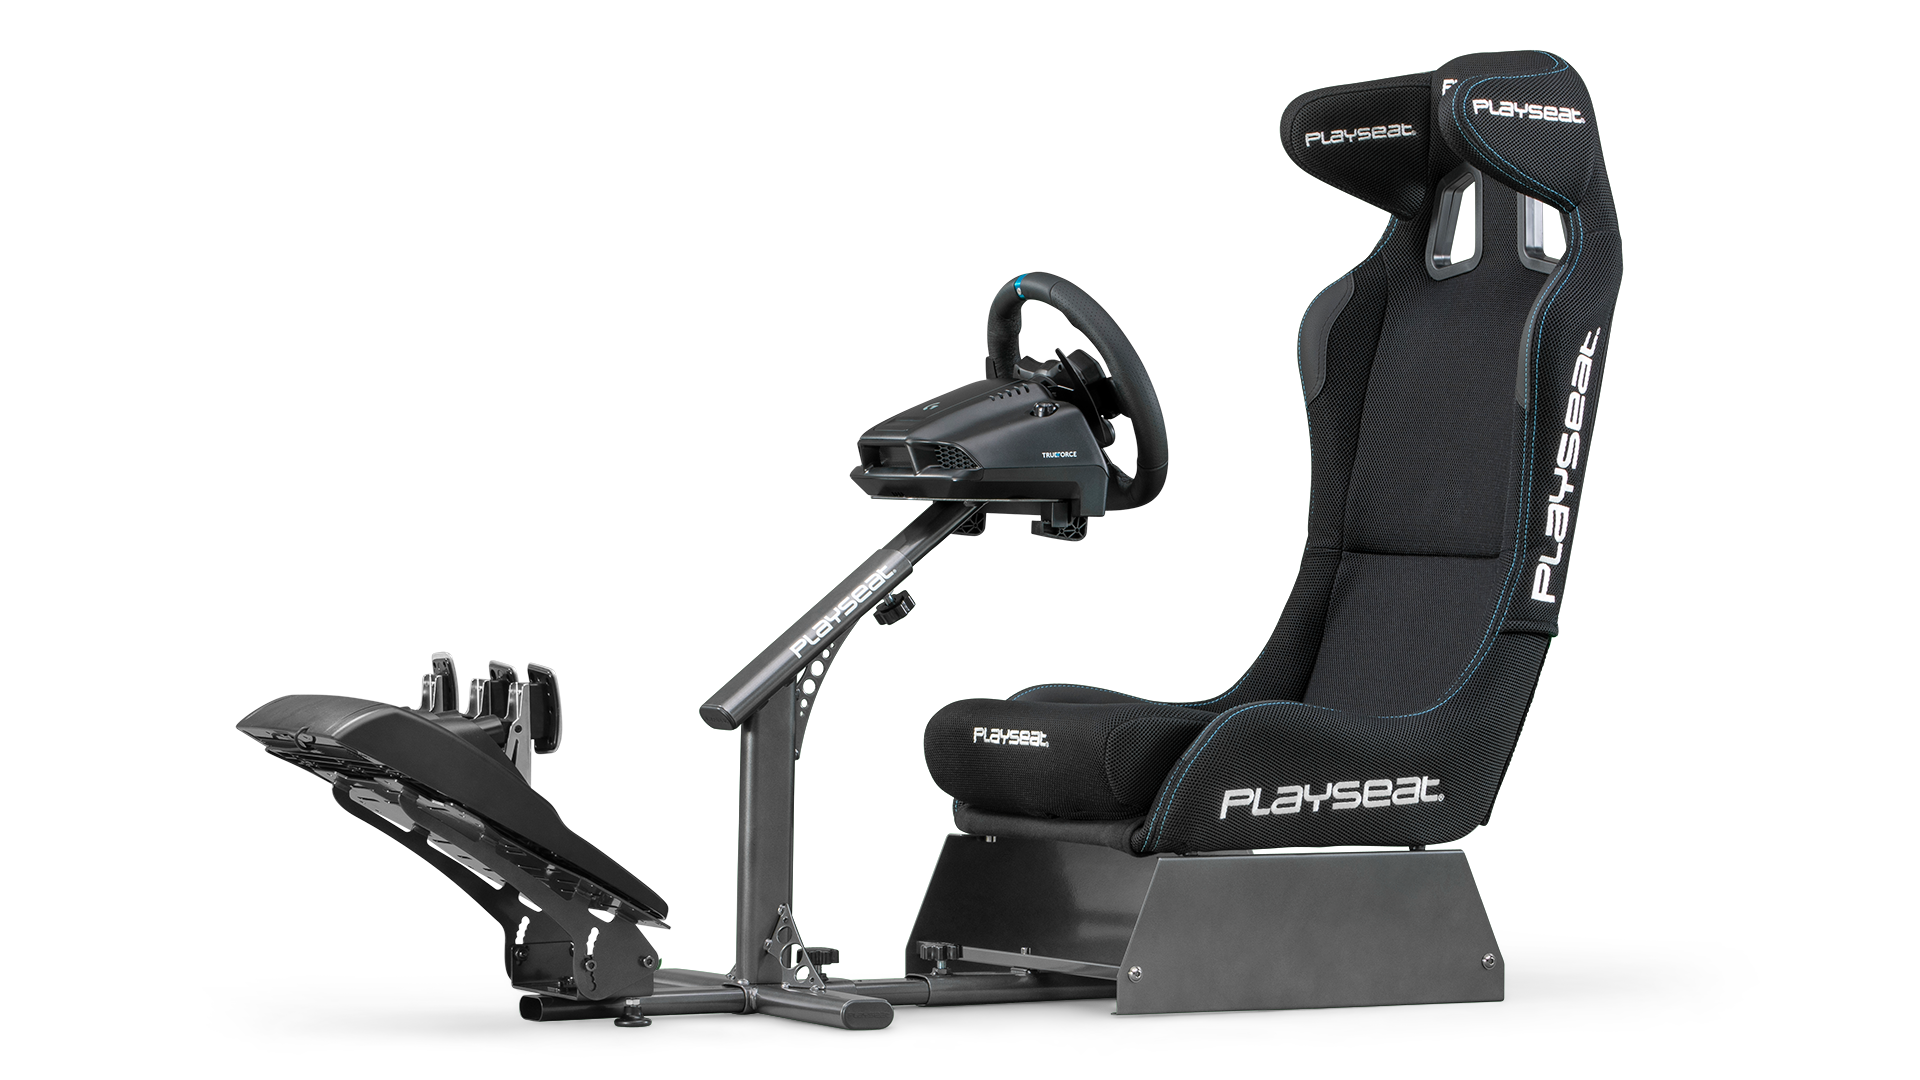 Playseat Challenge ActiFit Racing Chair in Black